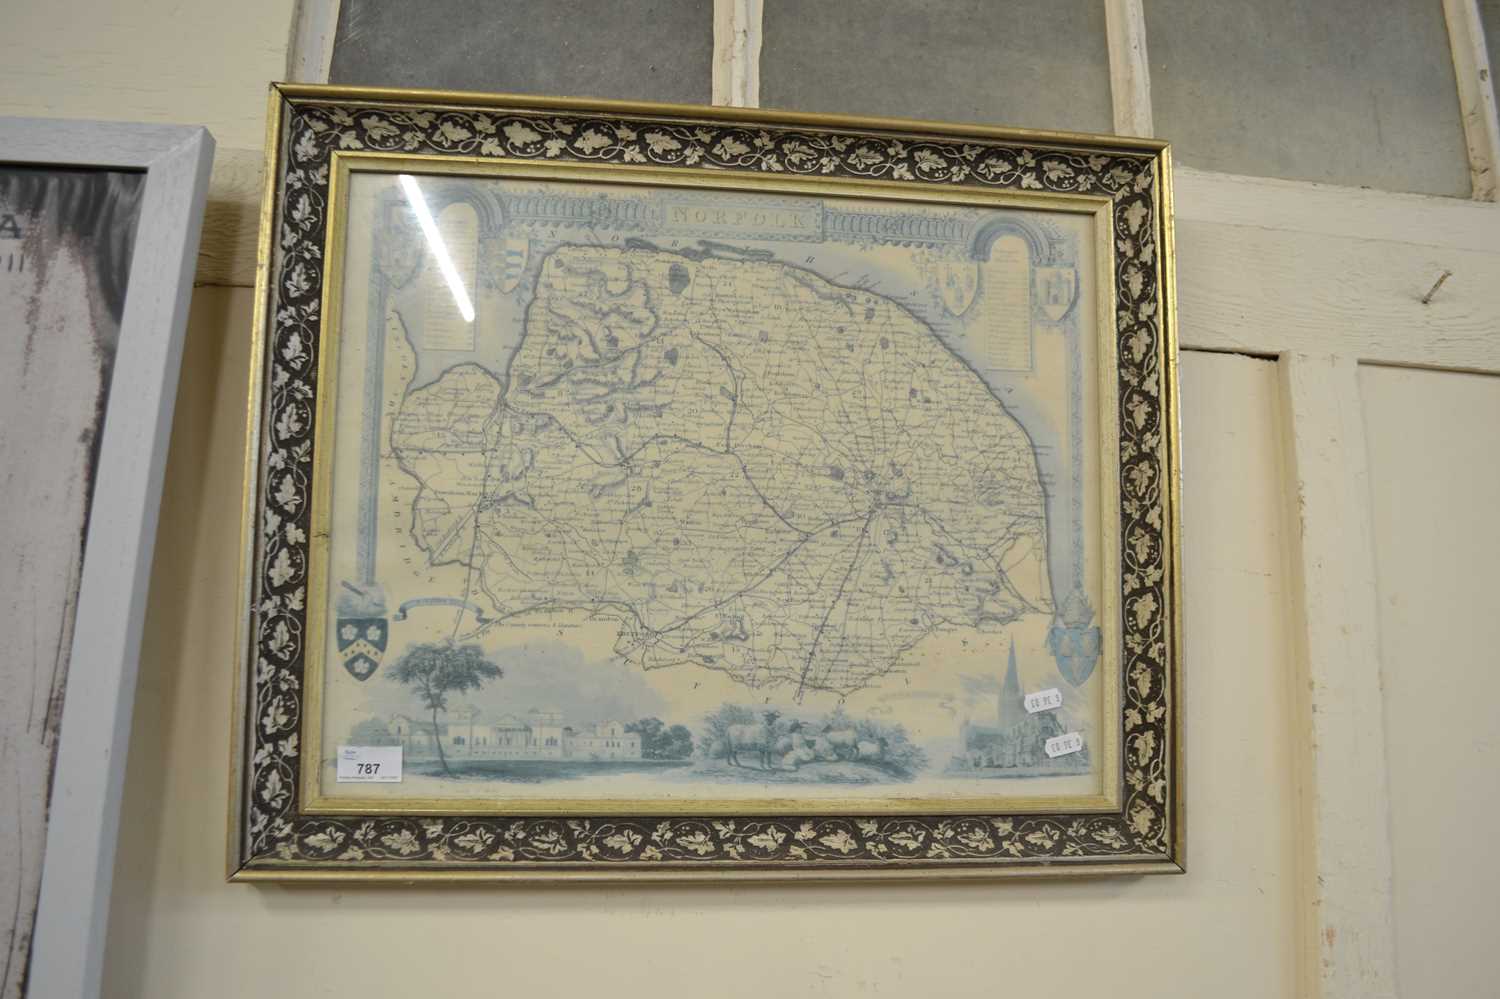 FRAMED MAP OF NORFOLK